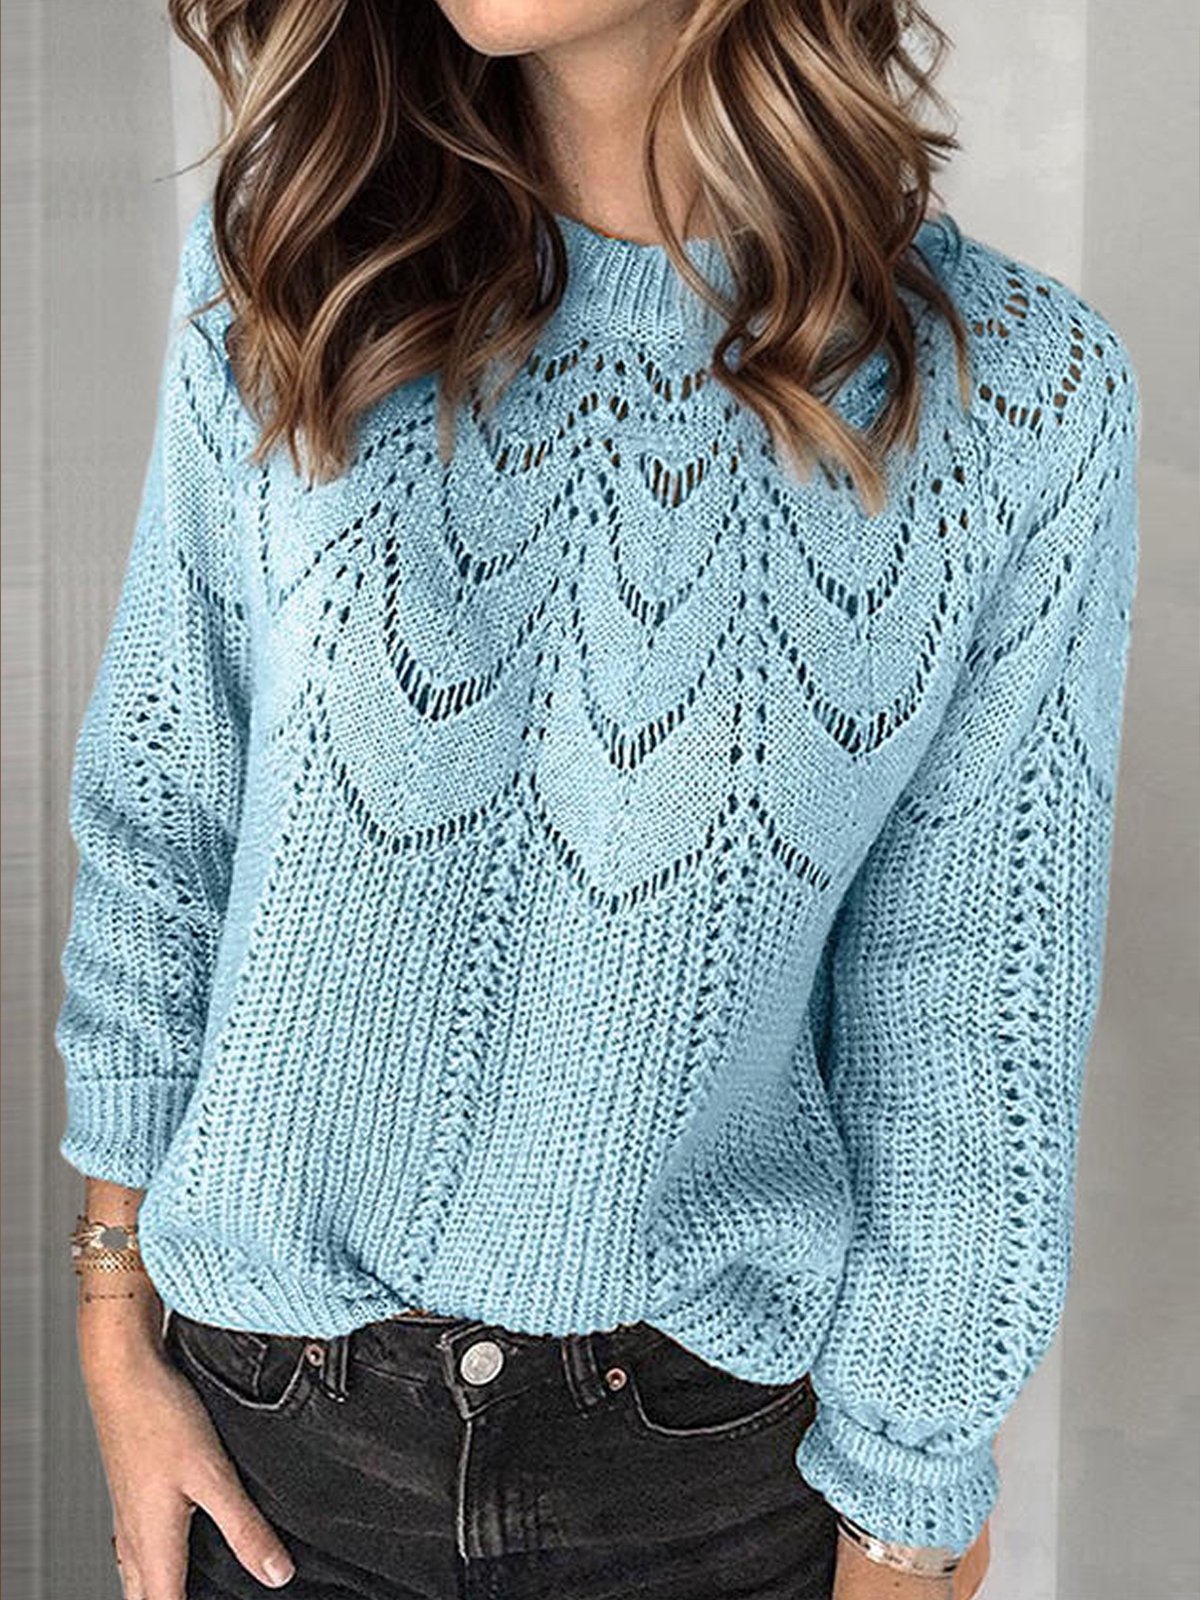 Wool/Knitting Plain Casual Sweater